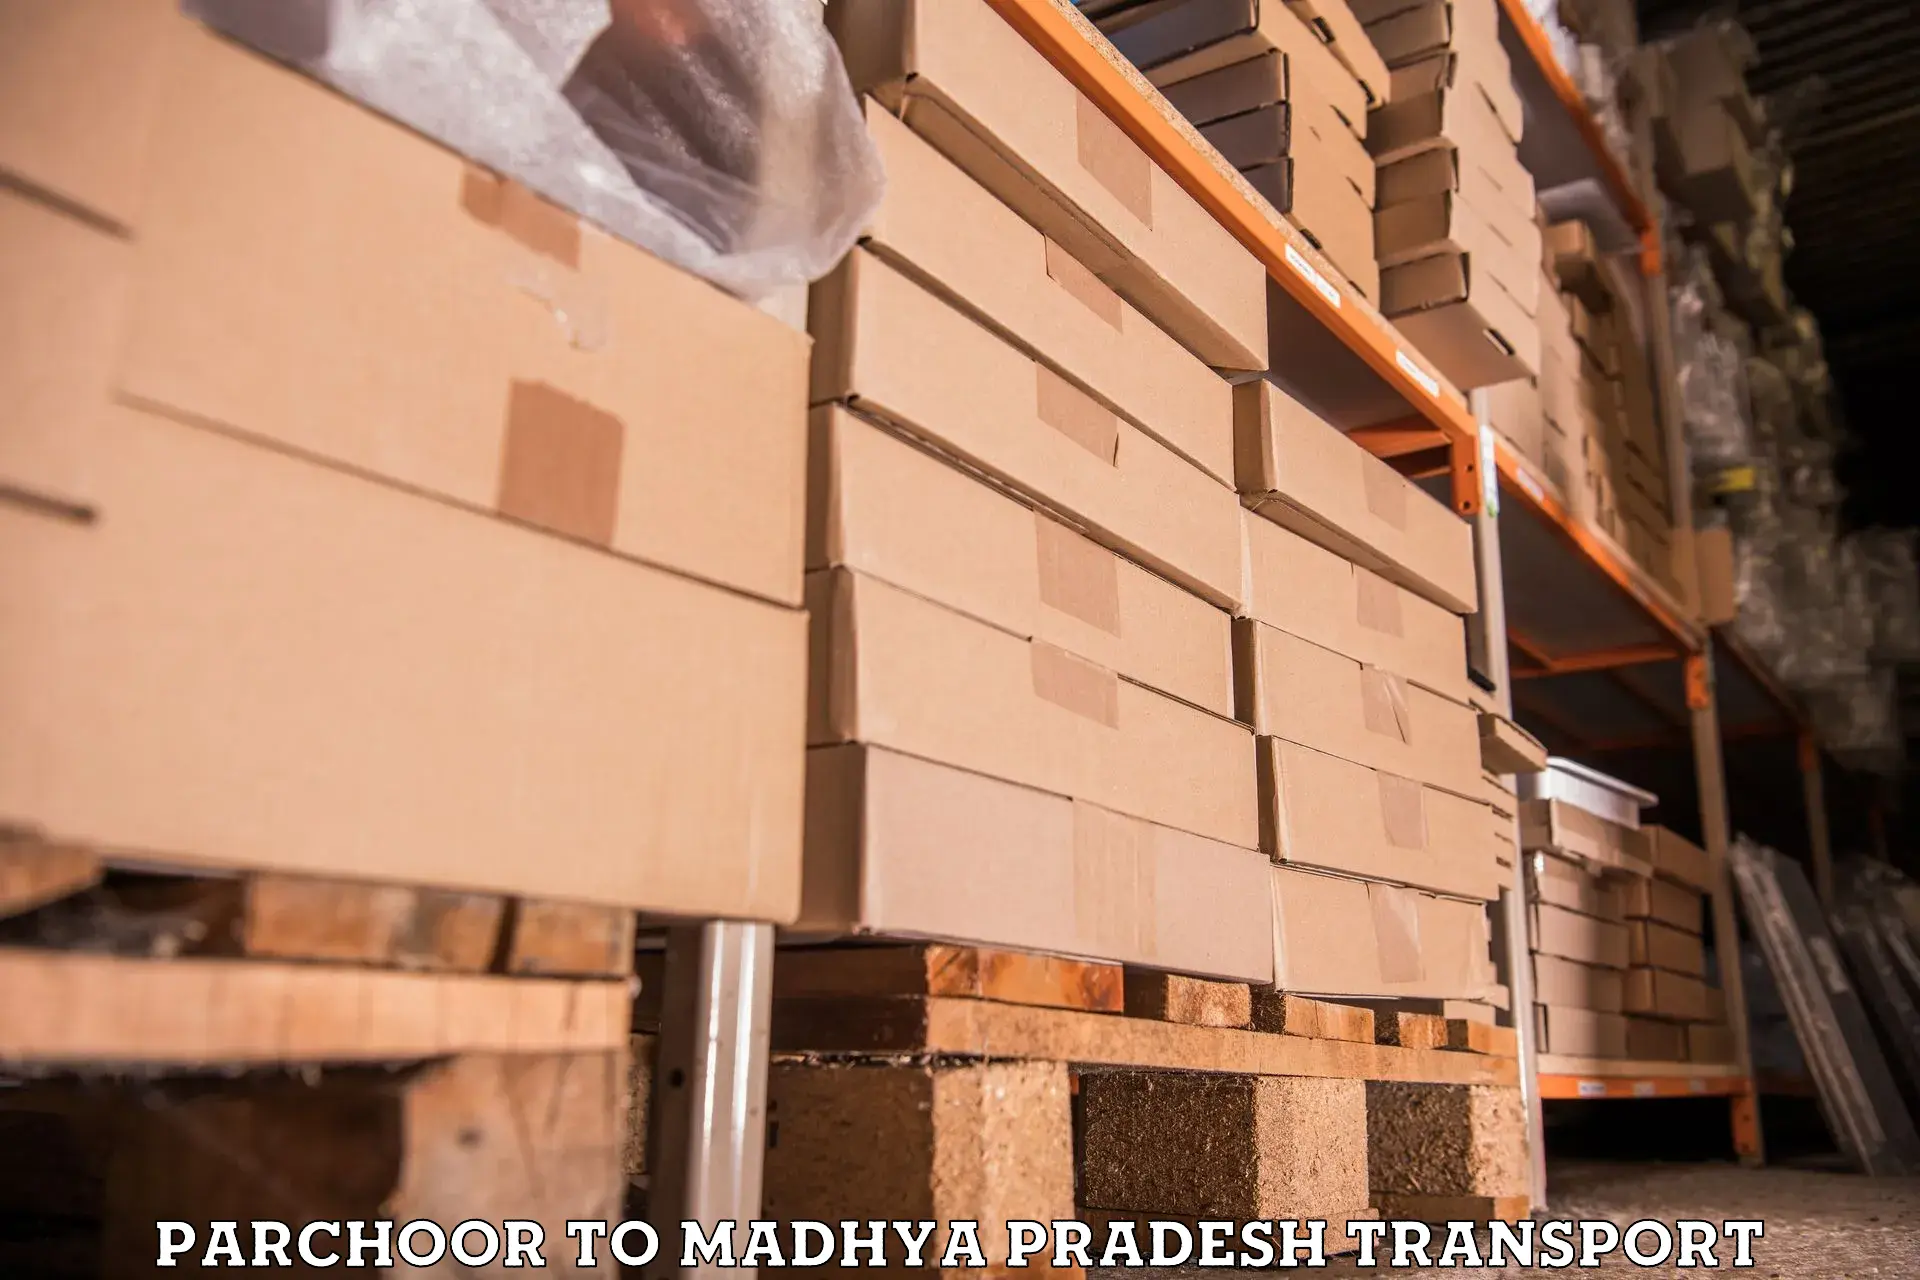 Transport in sharing Parchoor to Mandideep